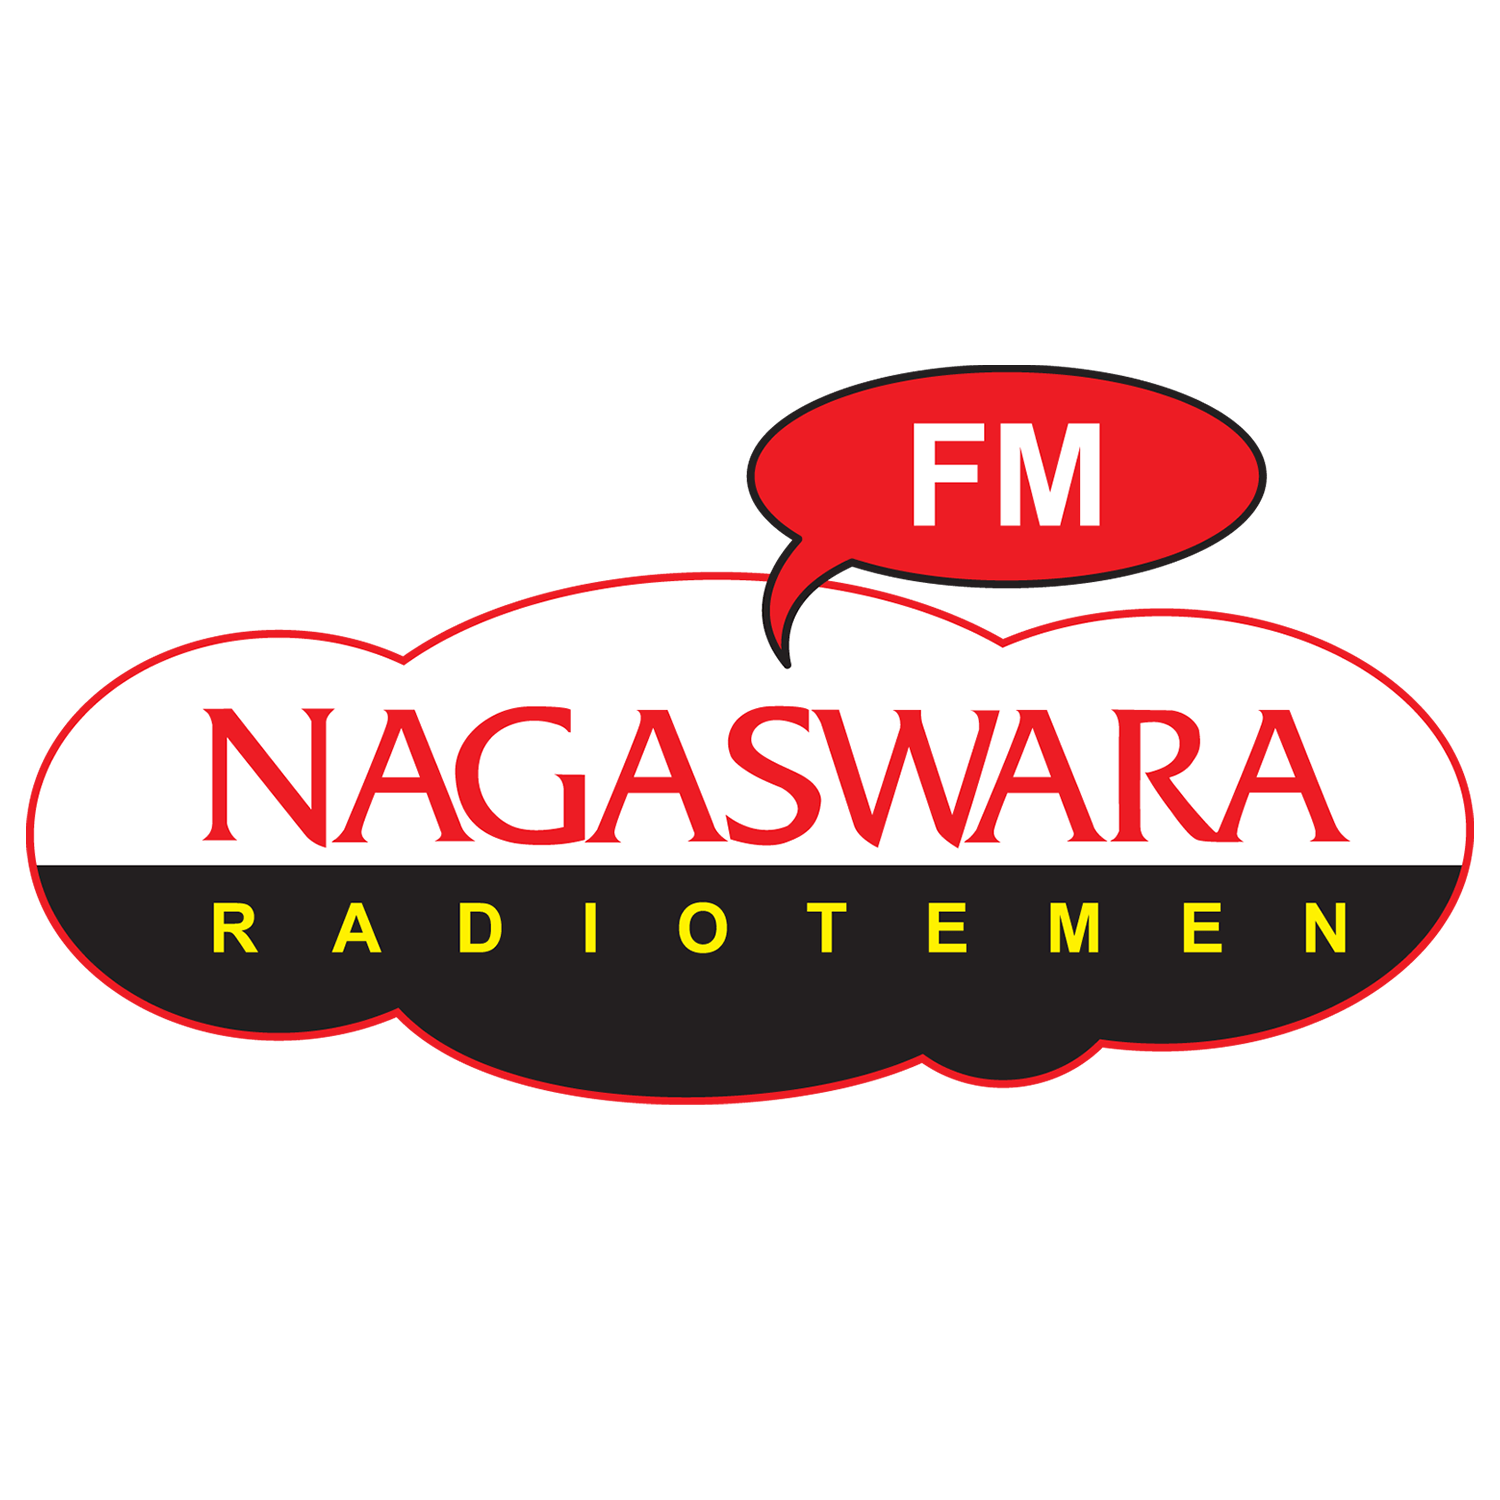 Nagaswara FM Bogor